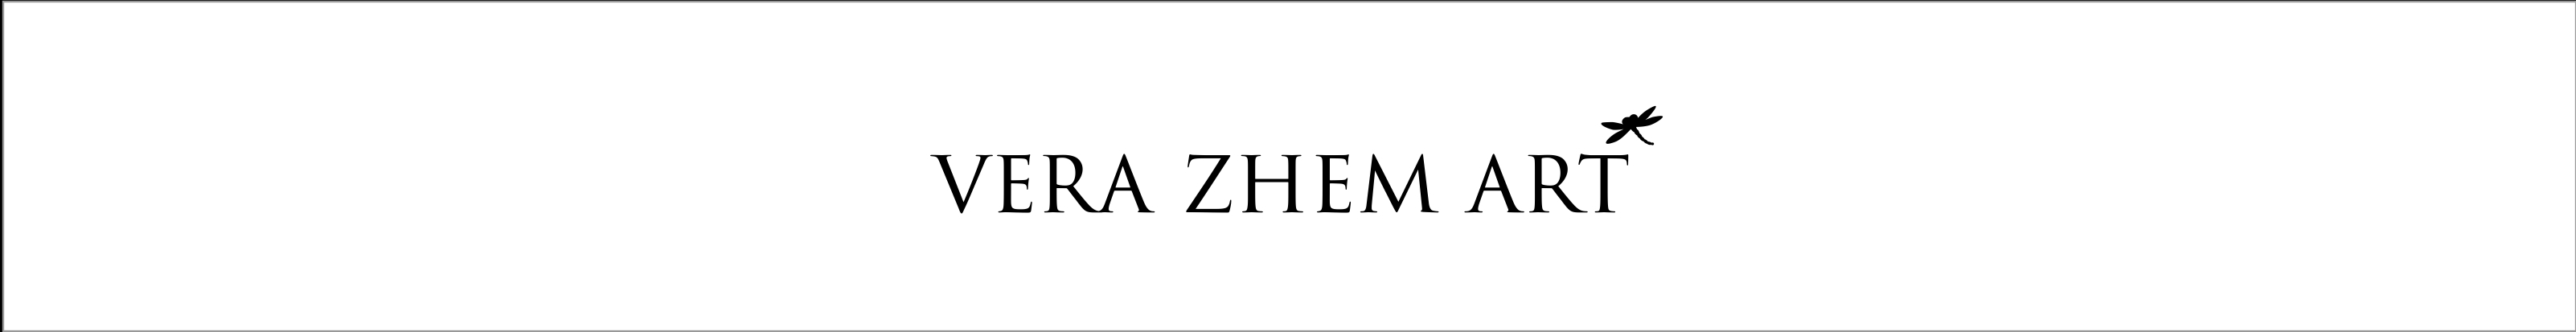 Profielbanner van Vera Zhem